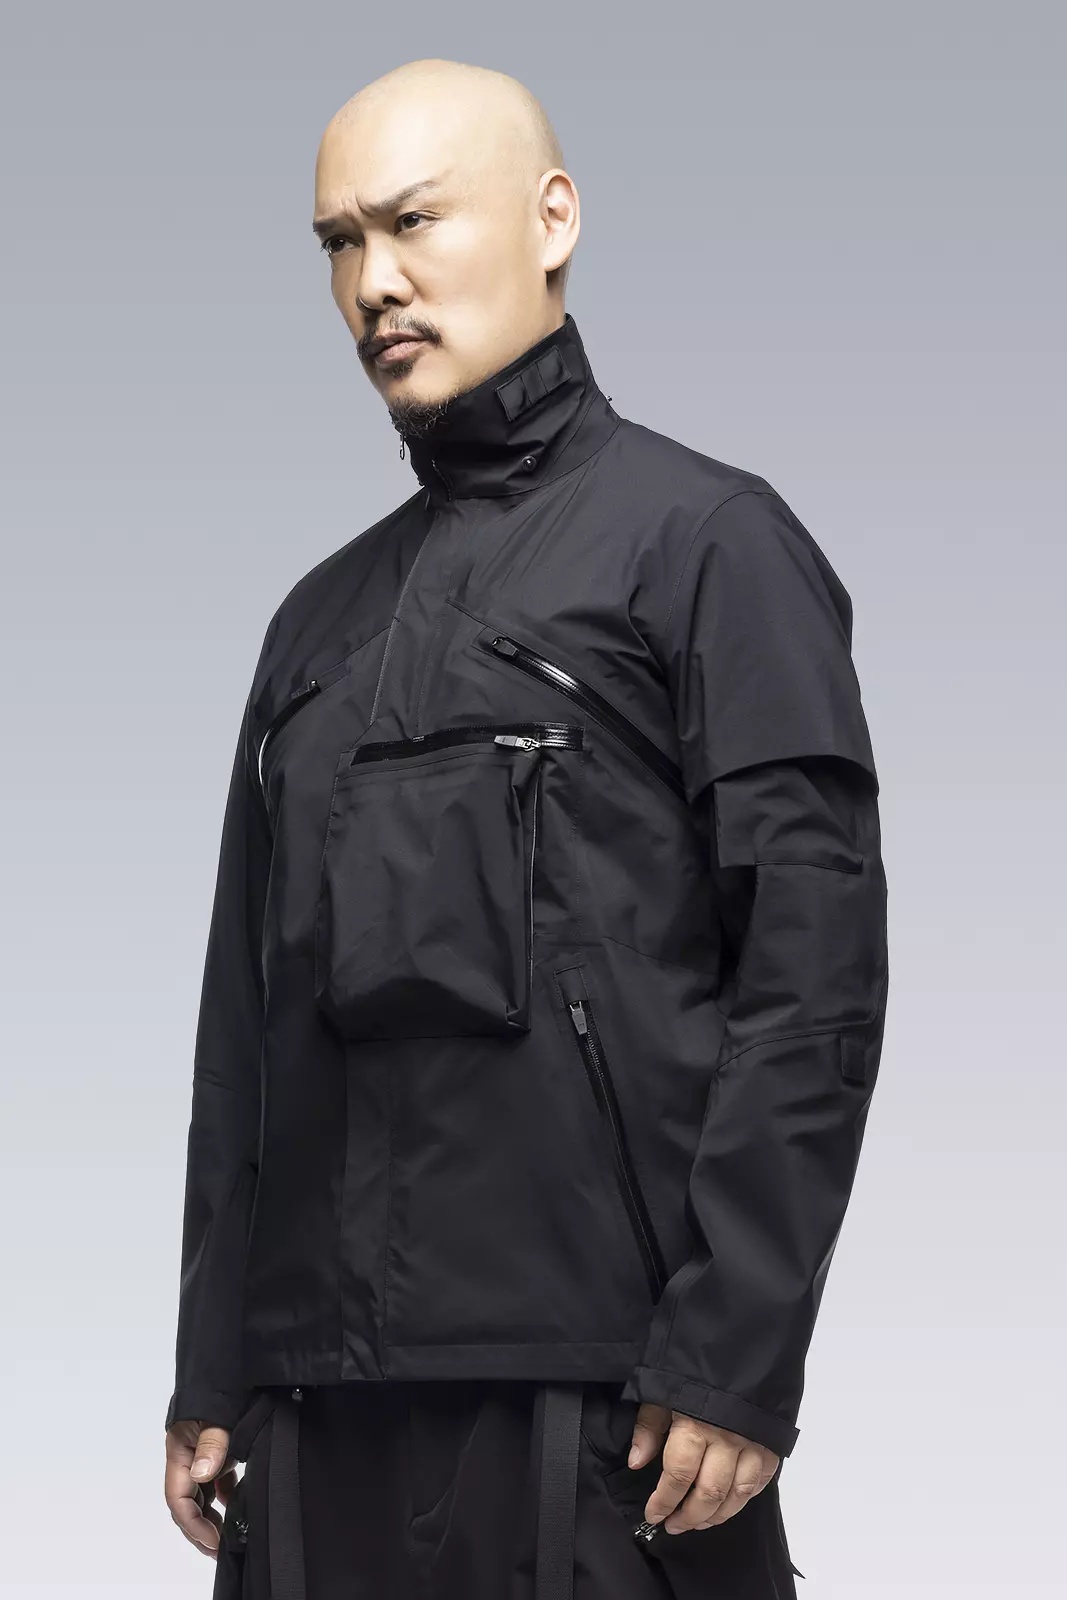 J1A-GTKR-BKS KR EX 3L Gore-Tex® Pro Interops Jacket Black with size 5 WR zippers in gloss black - 7